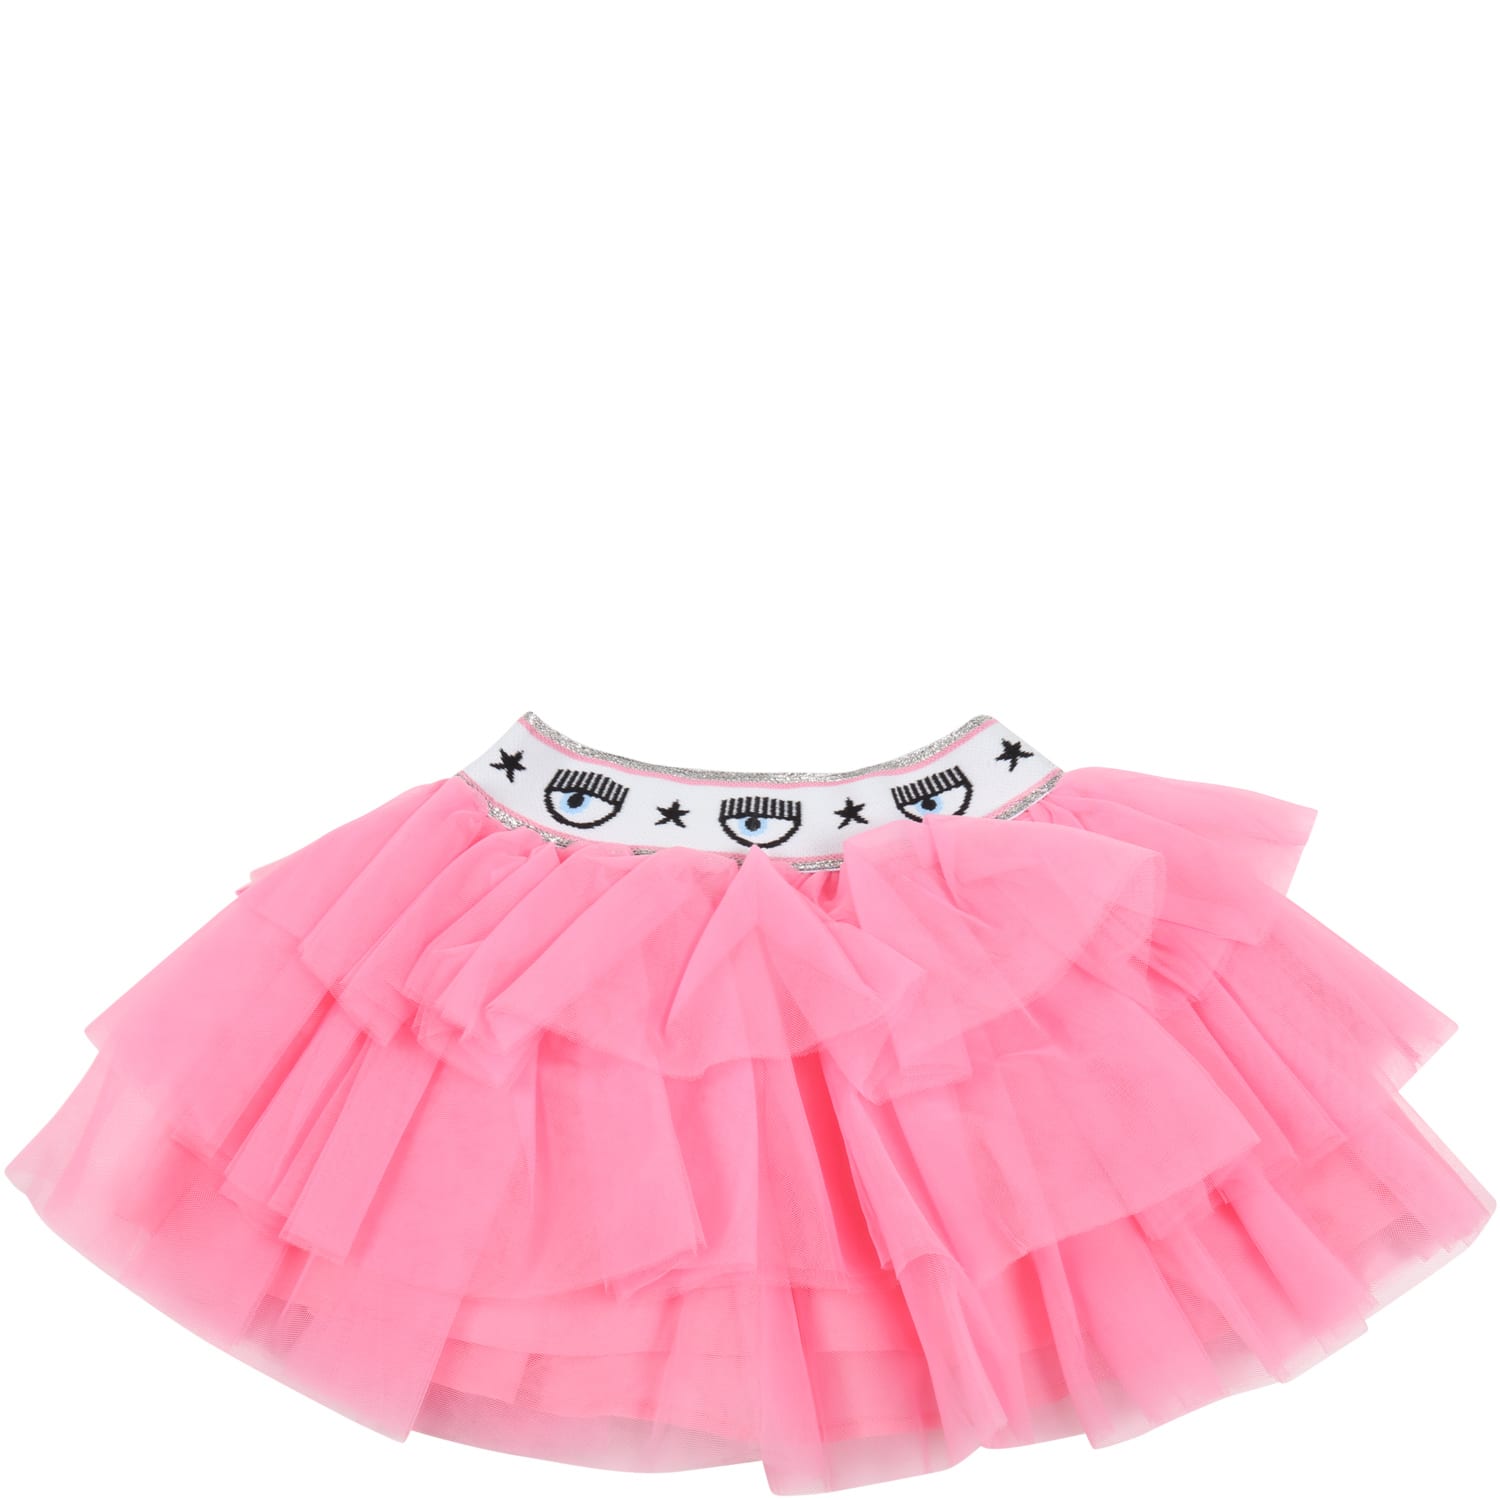 Chiara Ferragni Pink Skirt For Baby Girl With Iconic Blinking Eye